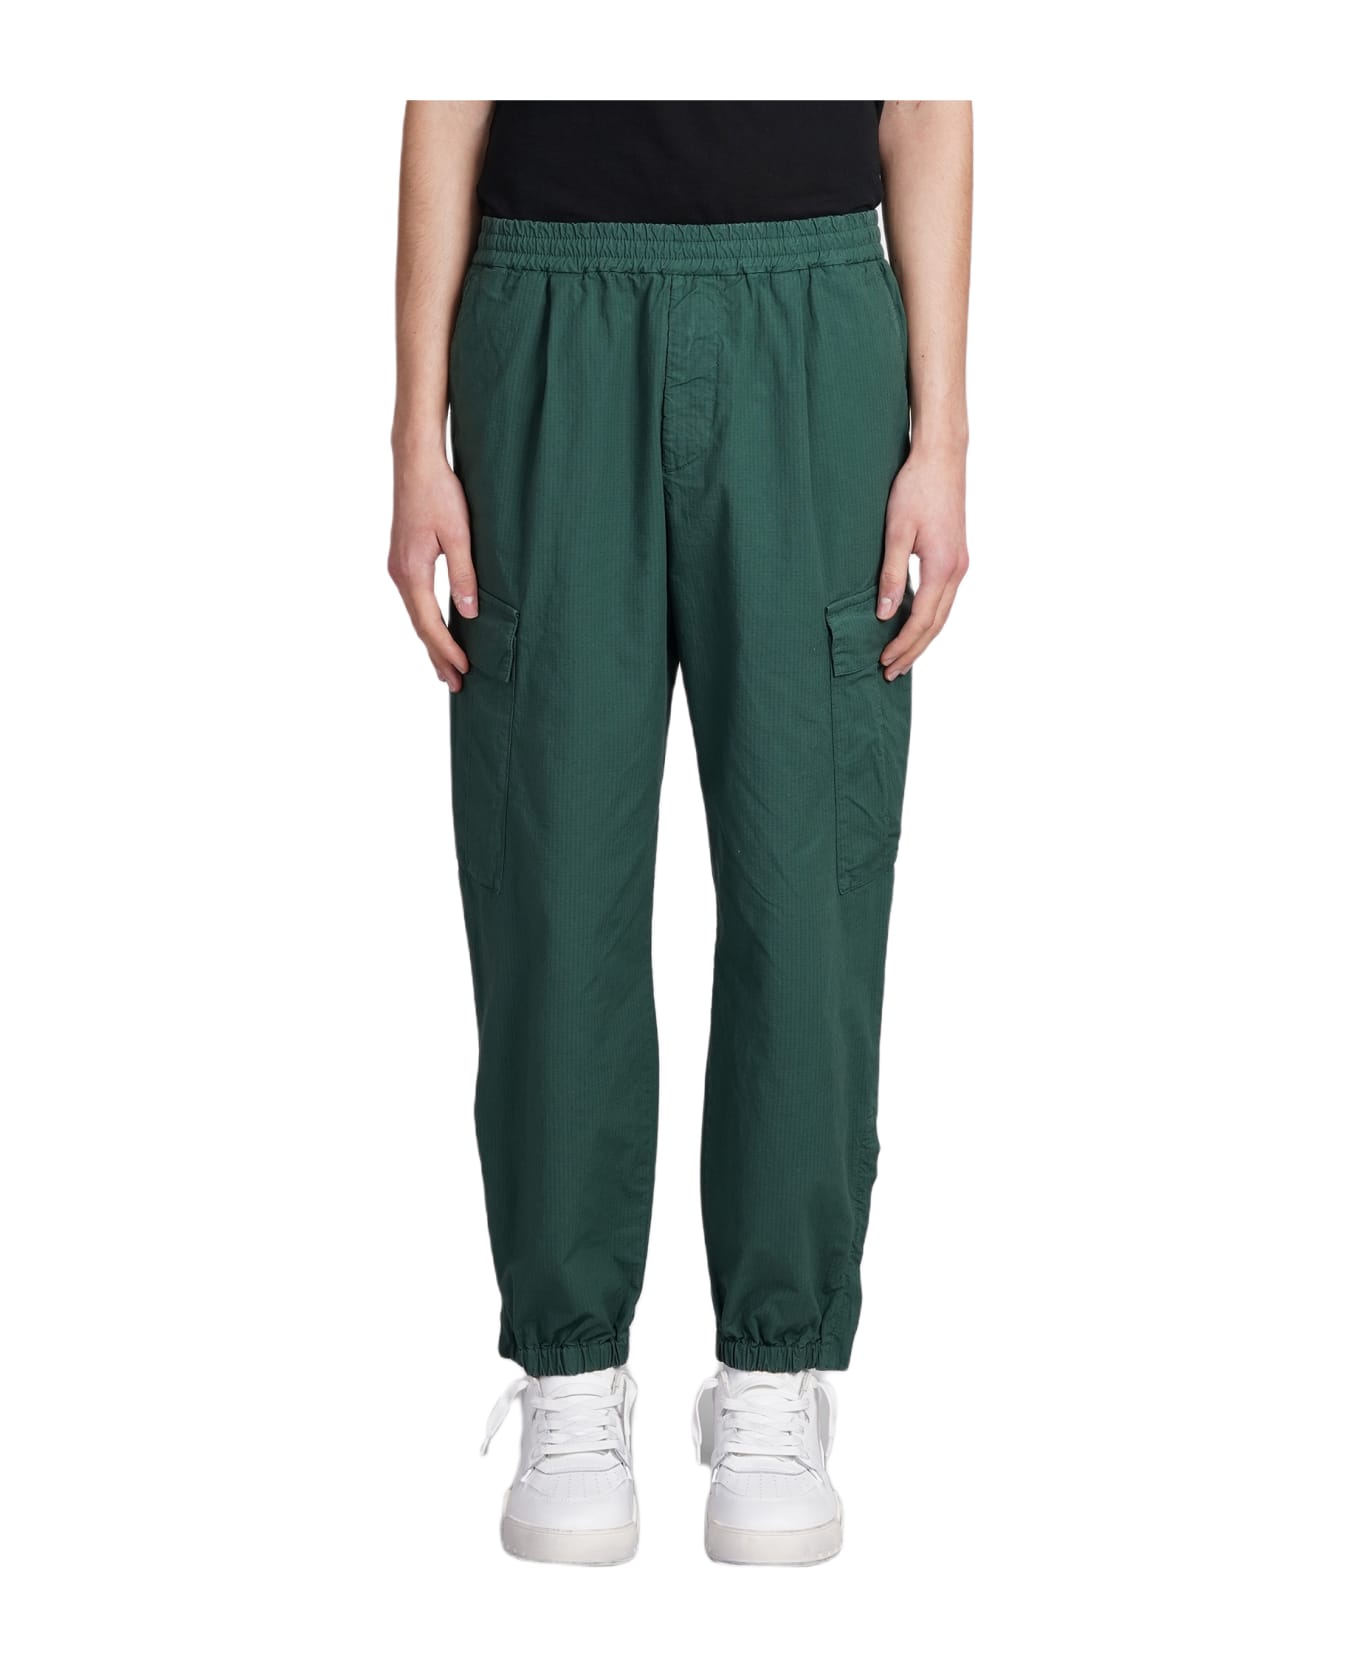 Barena Rambagio Pants In Green Cotton - green スウェットパンツ